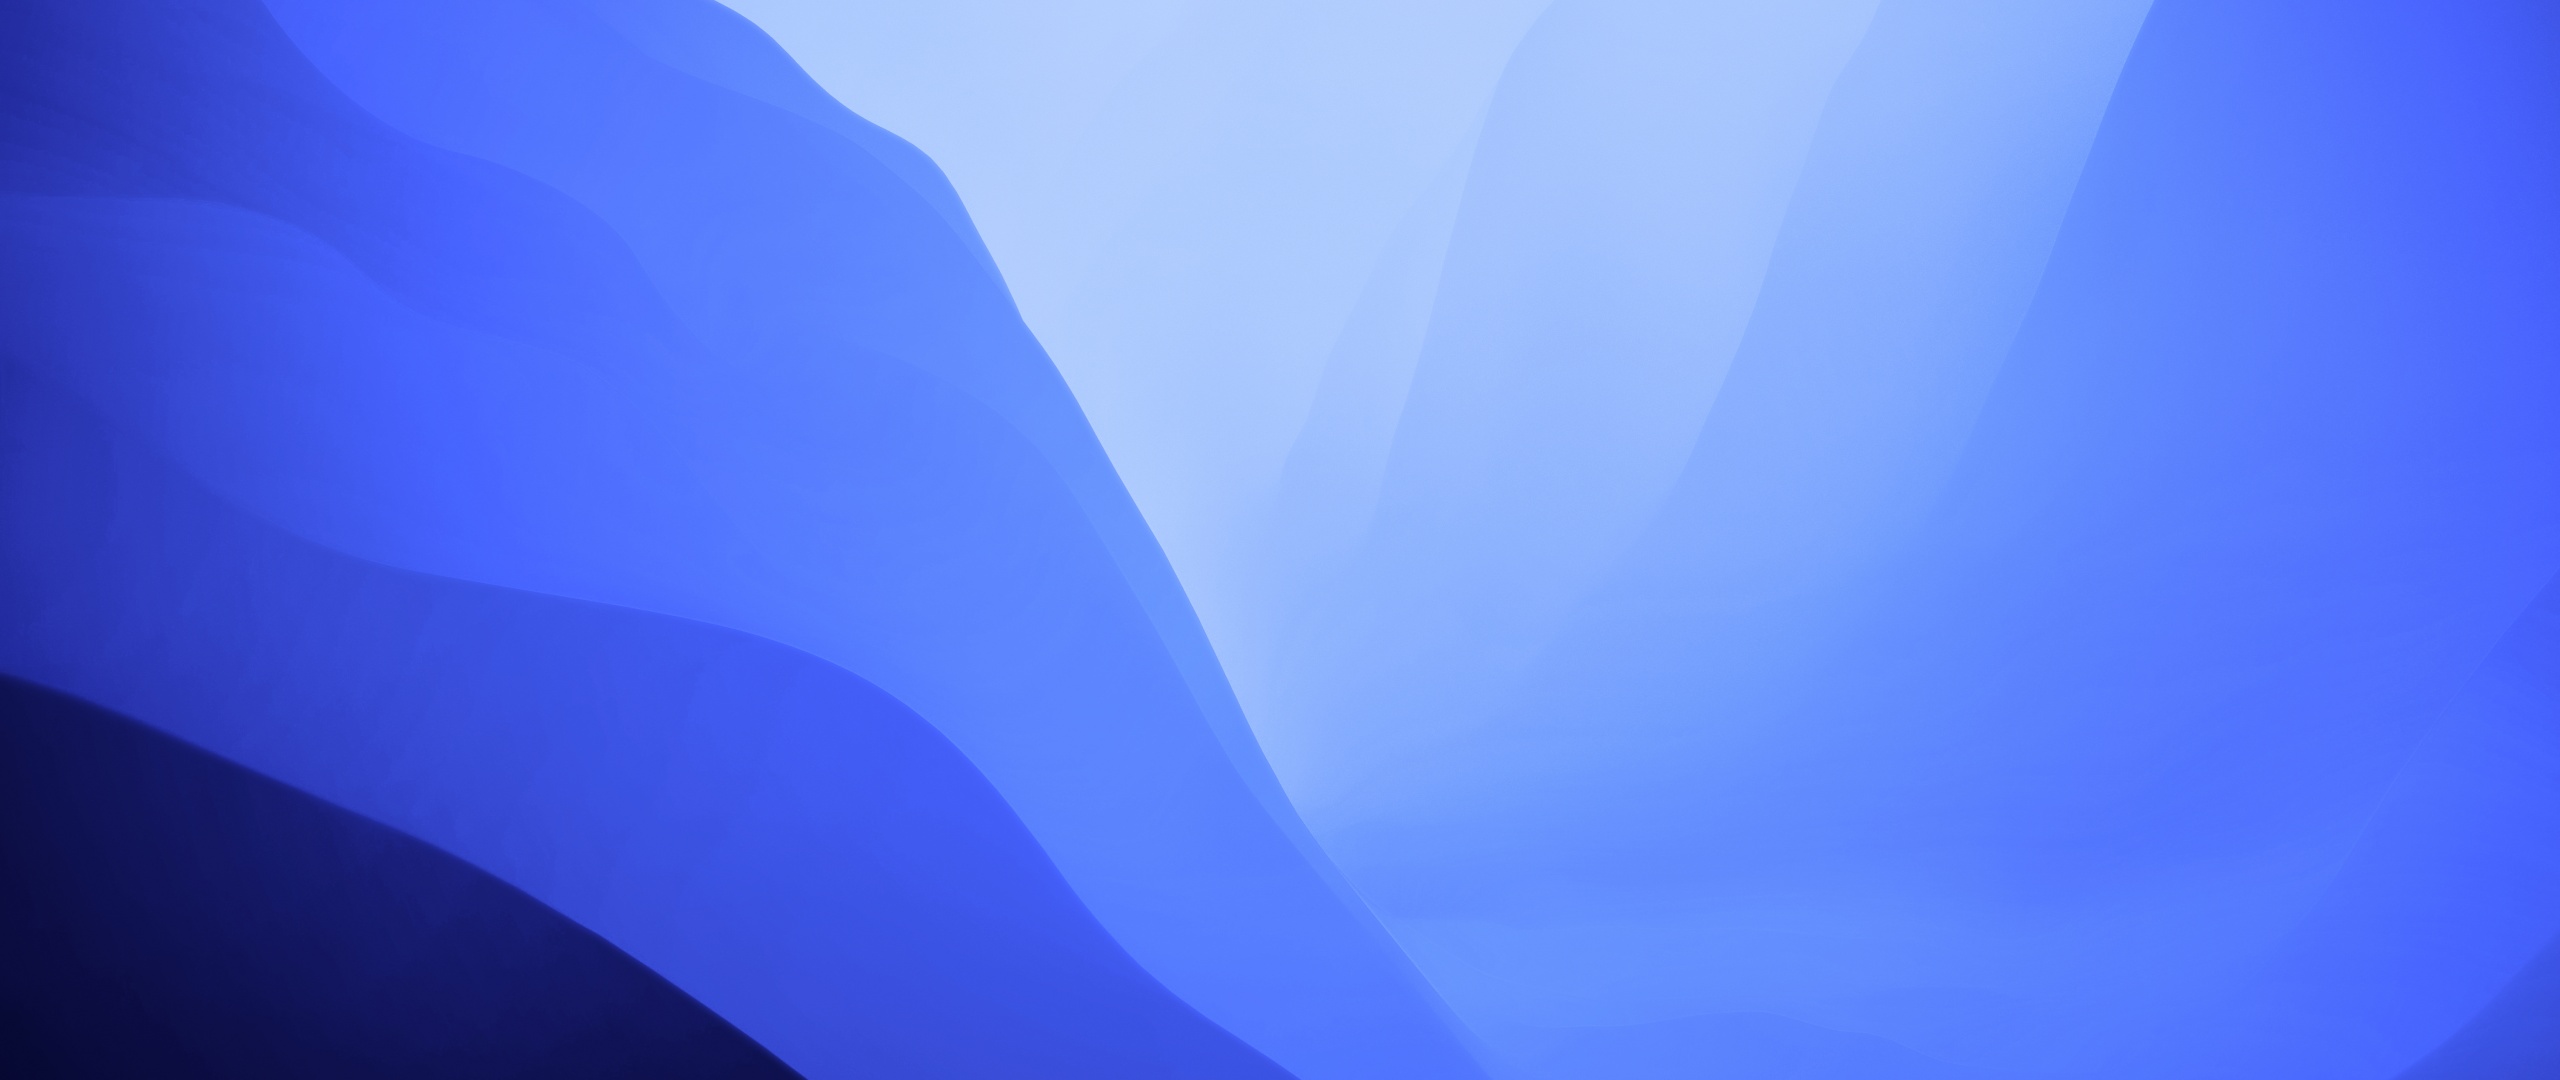 macOS Monterey Wallpaper 4K, Stock, Blue, Light, Gradients, #5898